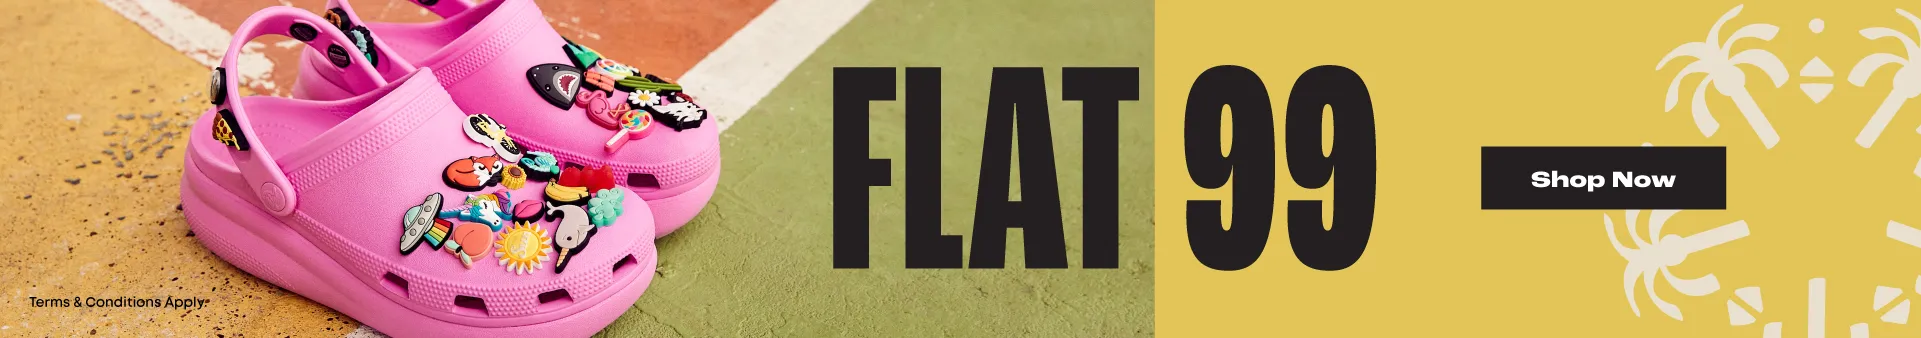 Flat 99